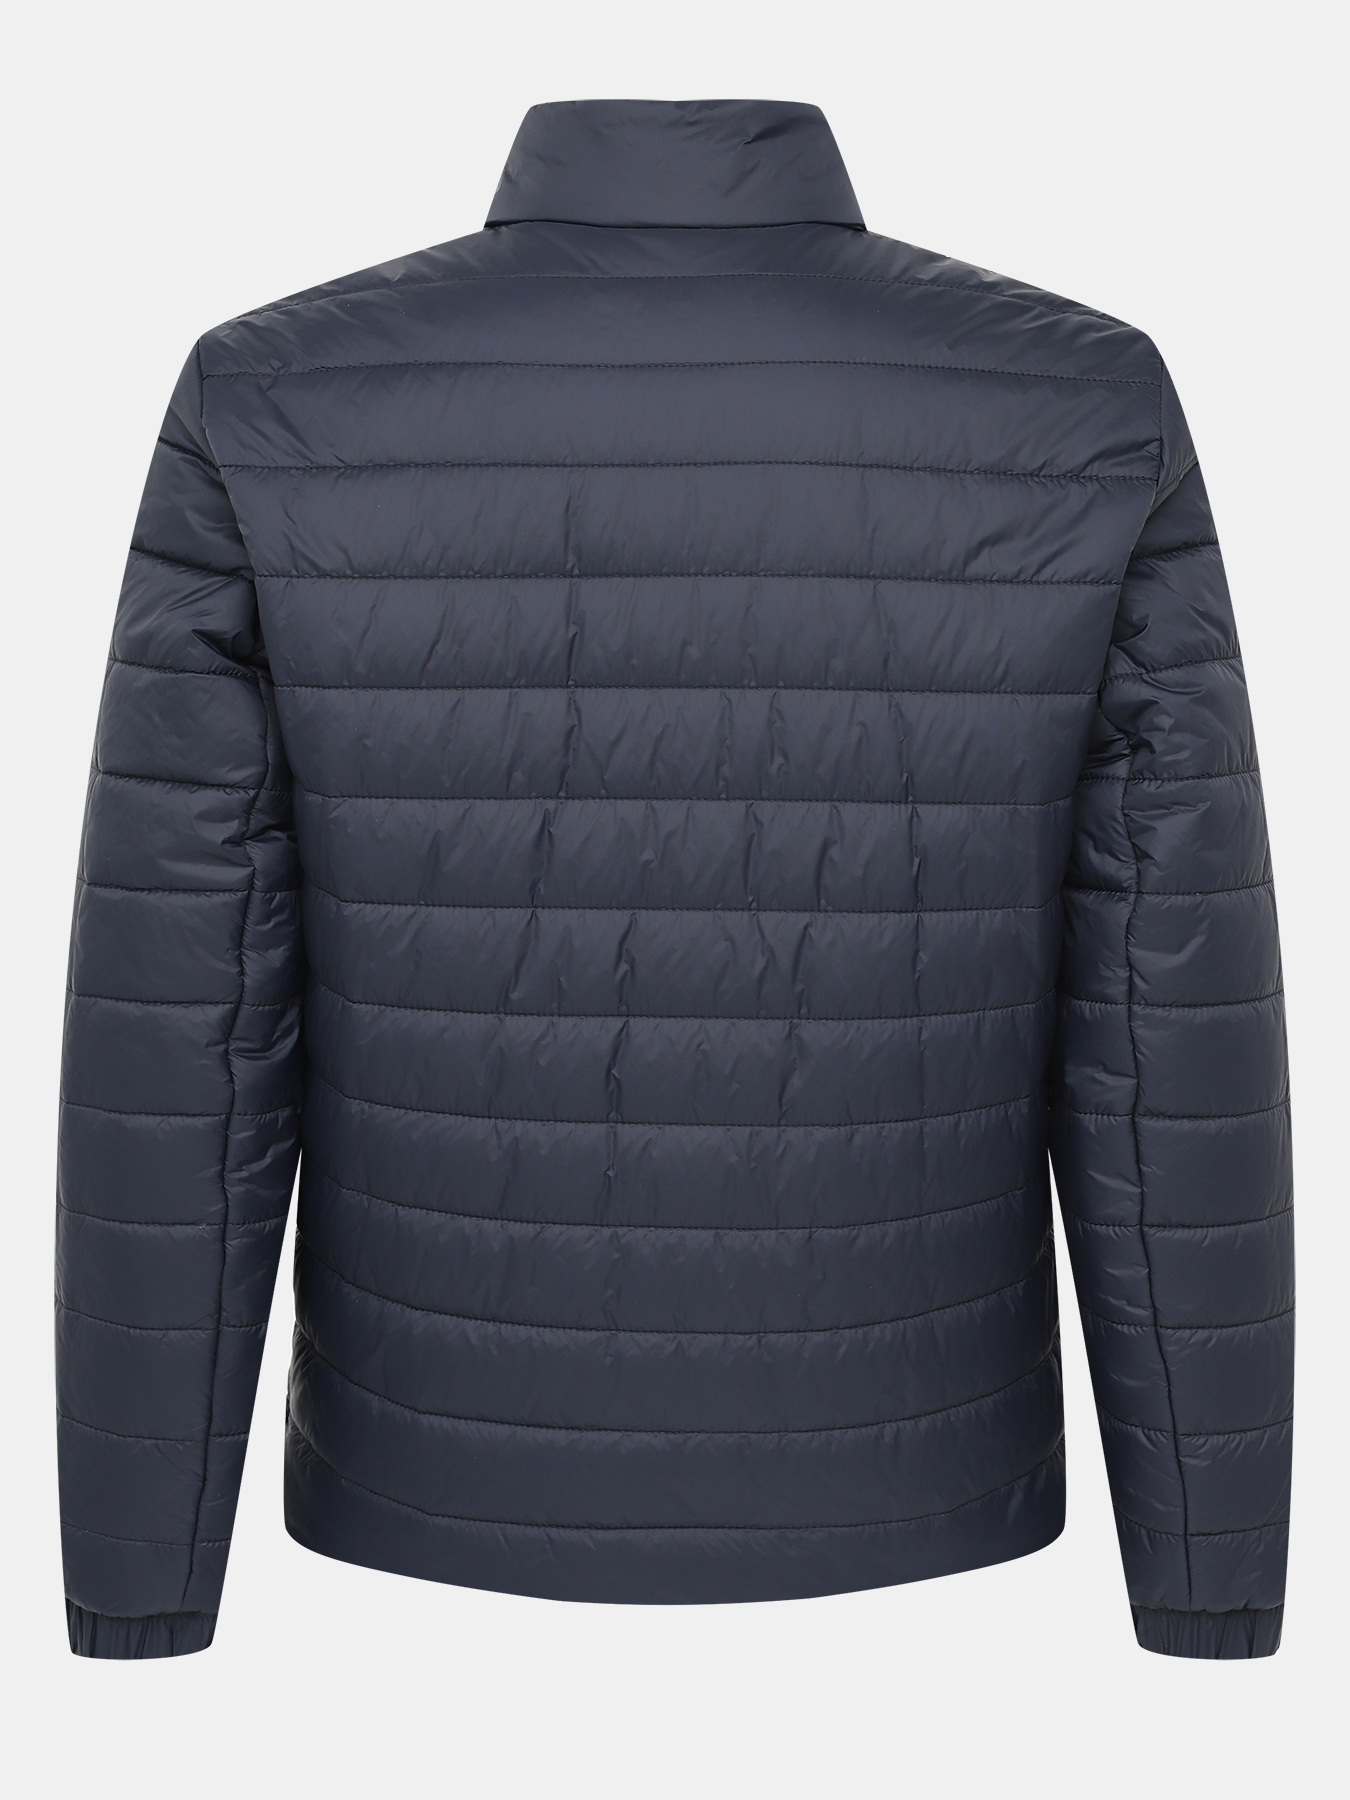 Куртка Benti HUGO 421240-044, цвет темно-синий, размер 50-52 - фото 2